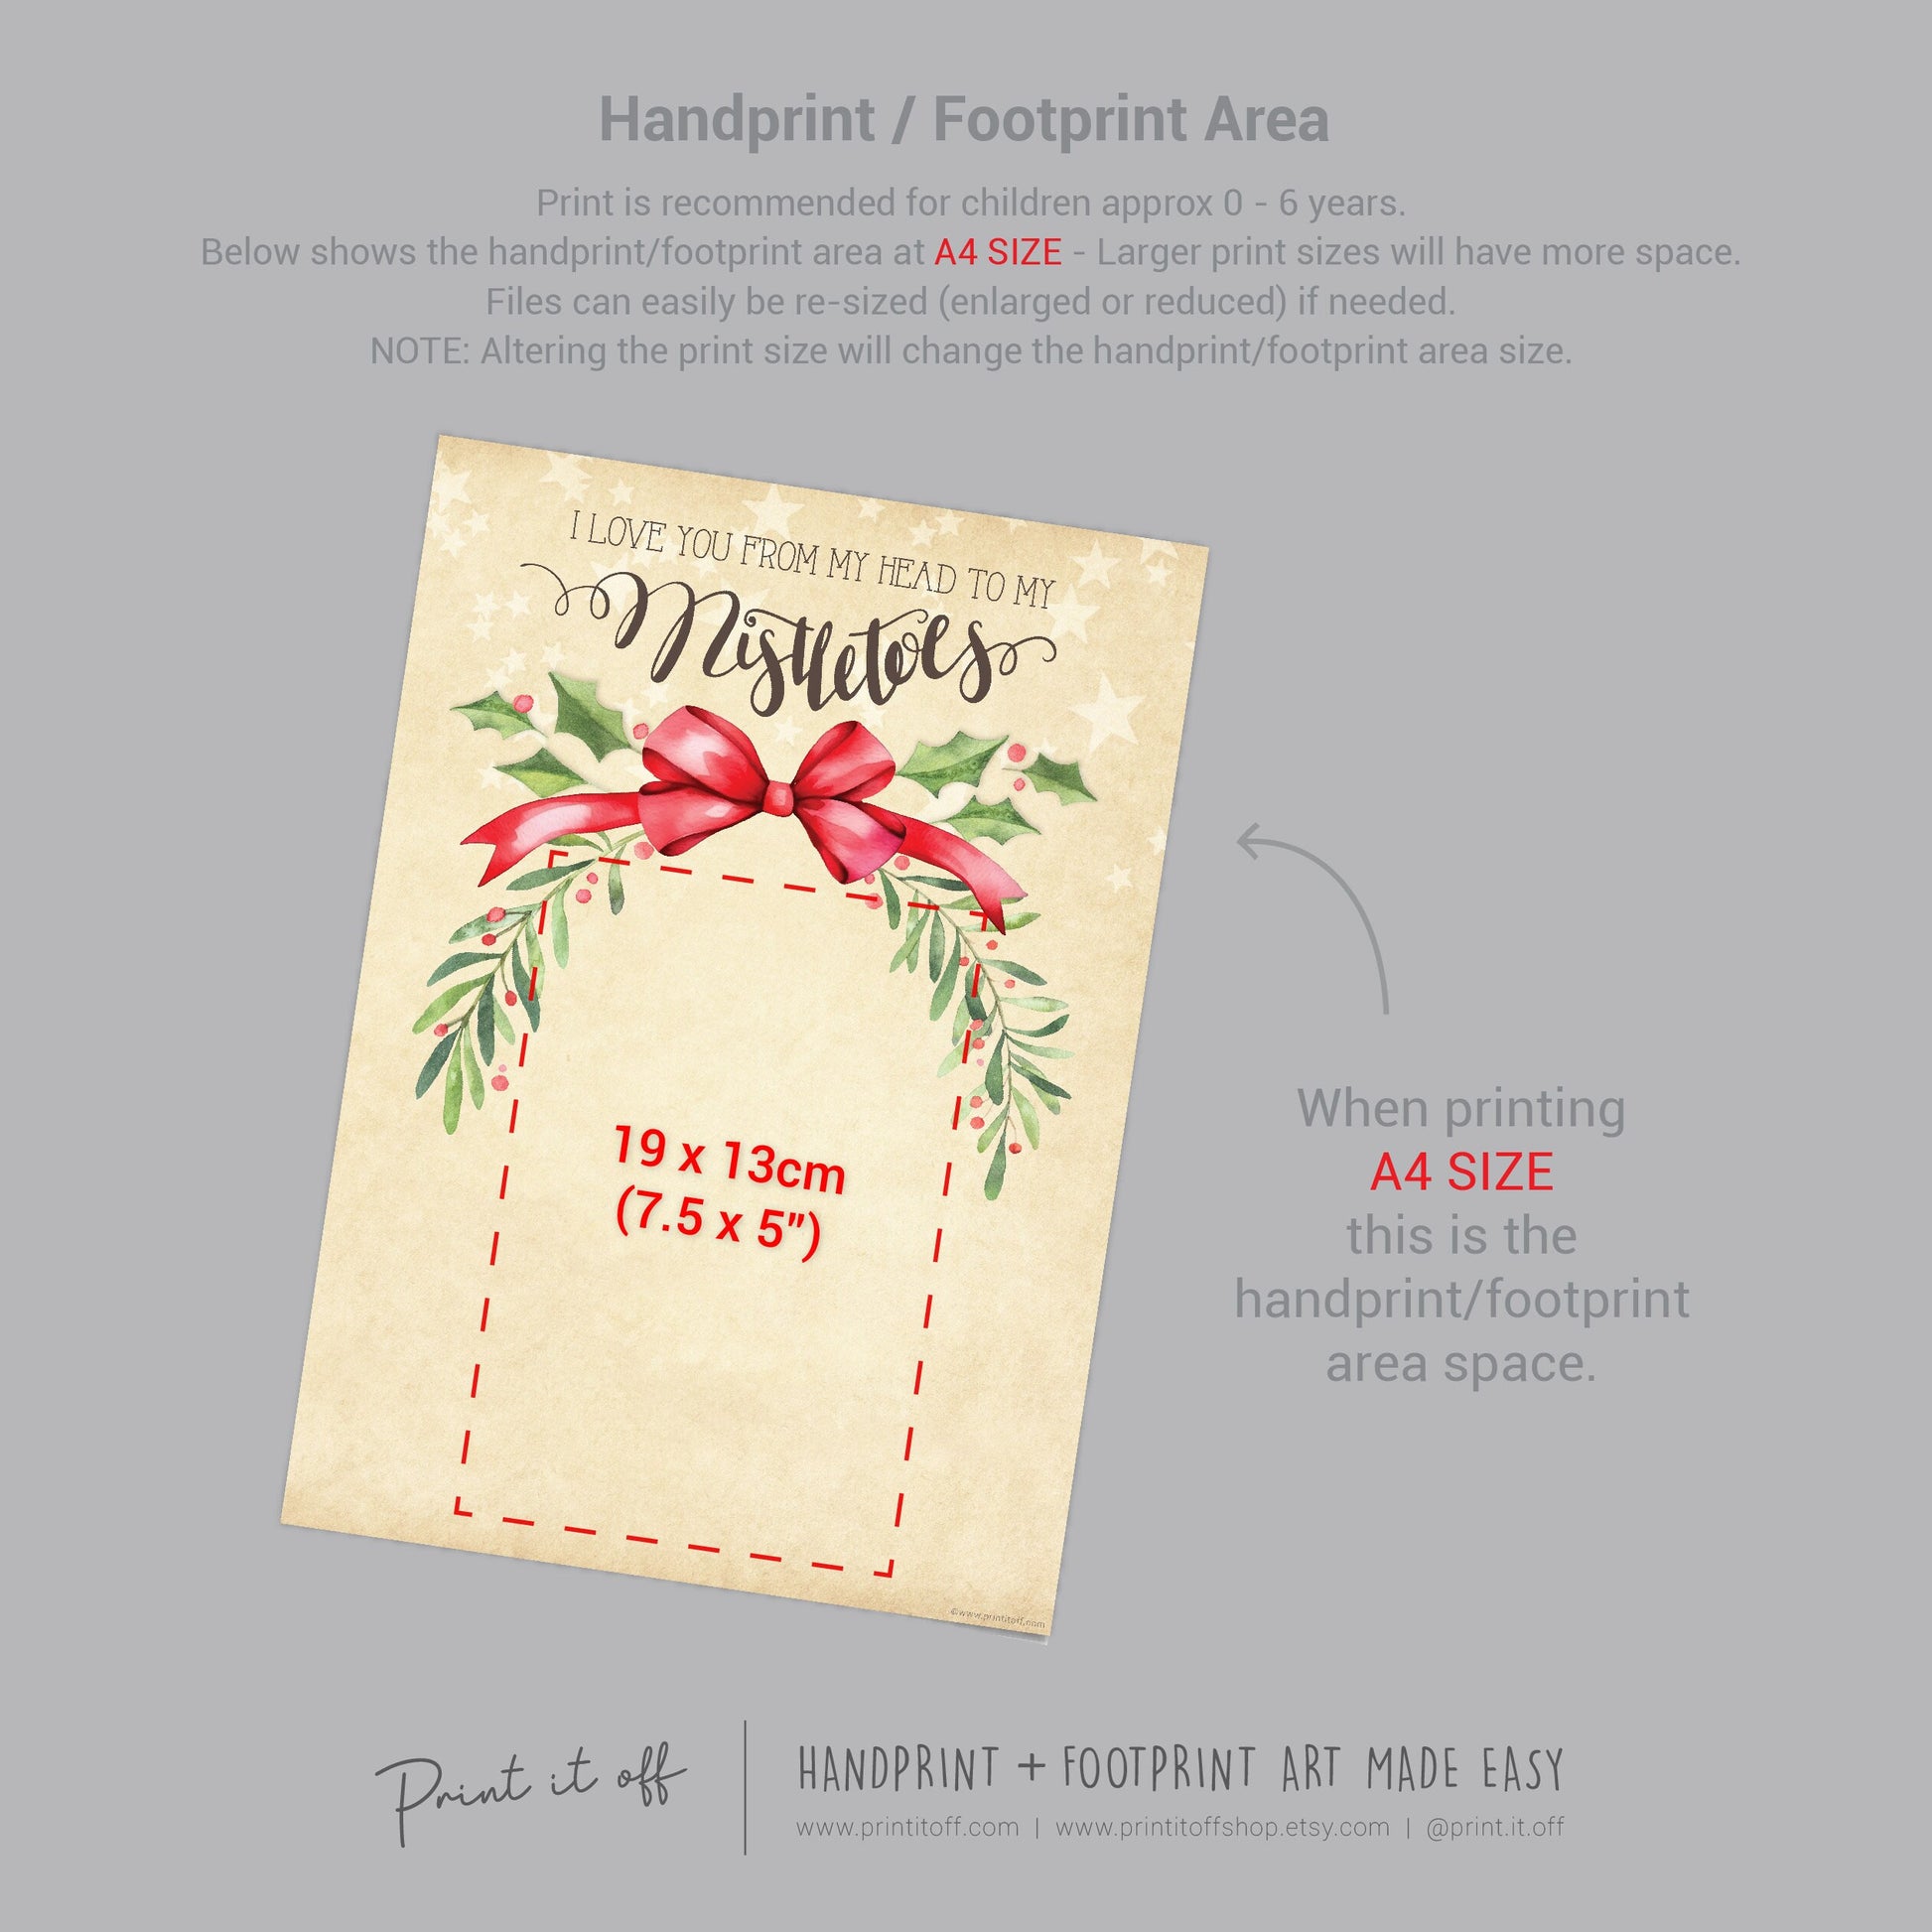 Mistletoes Footprint Foot Feet Art Craft / Christmas Xmas Kids Baby Toddler / Love You From My Head Keepsake Gift Card PRINT IT OFF